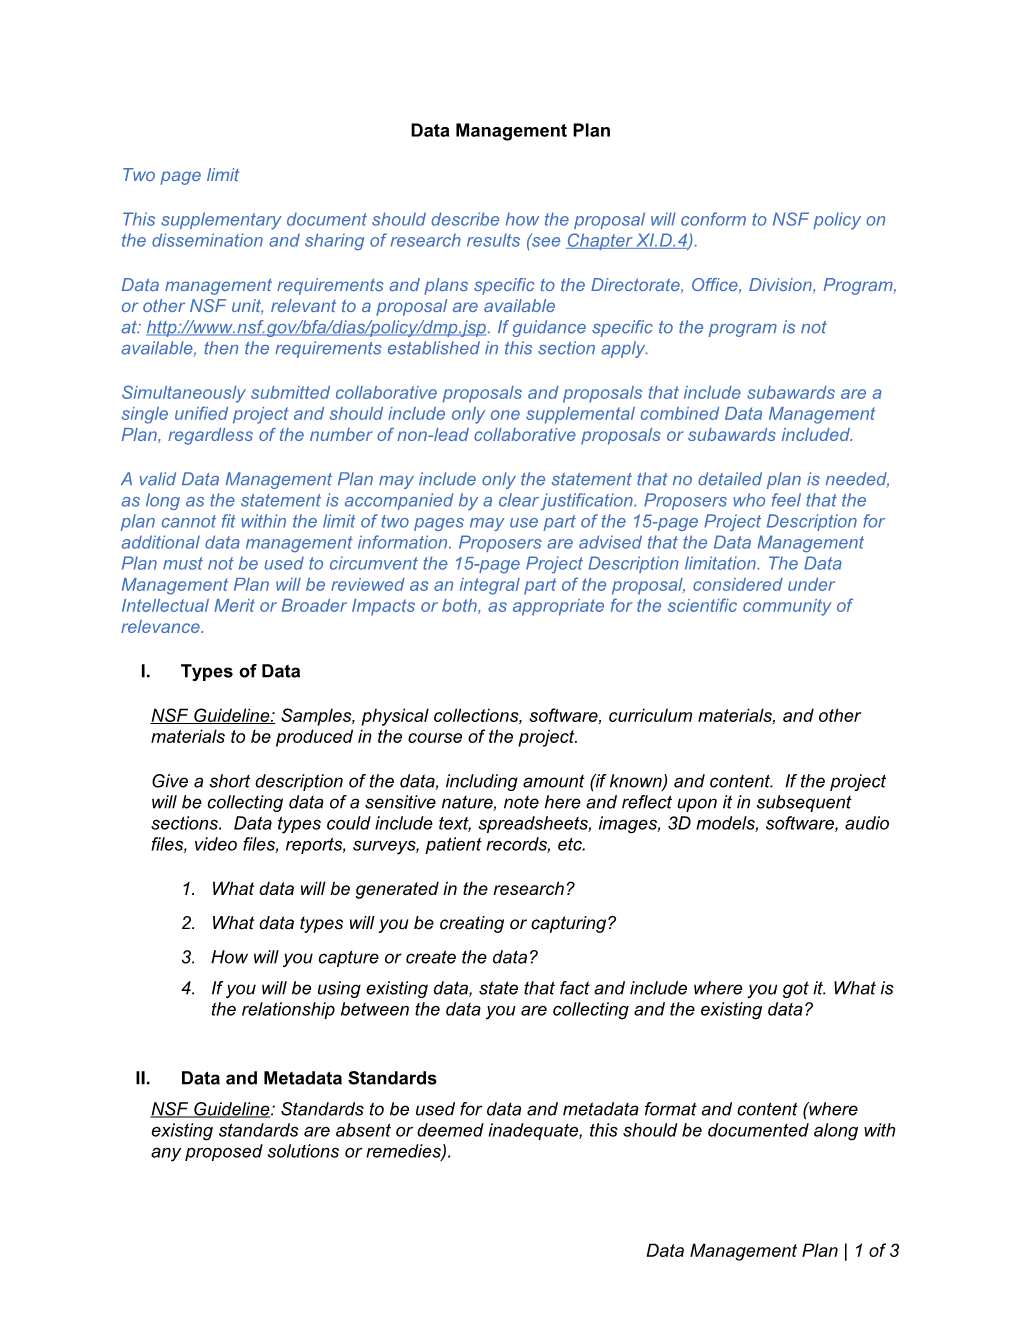 NSF DMP Instructions - Uvatemplate - Generic